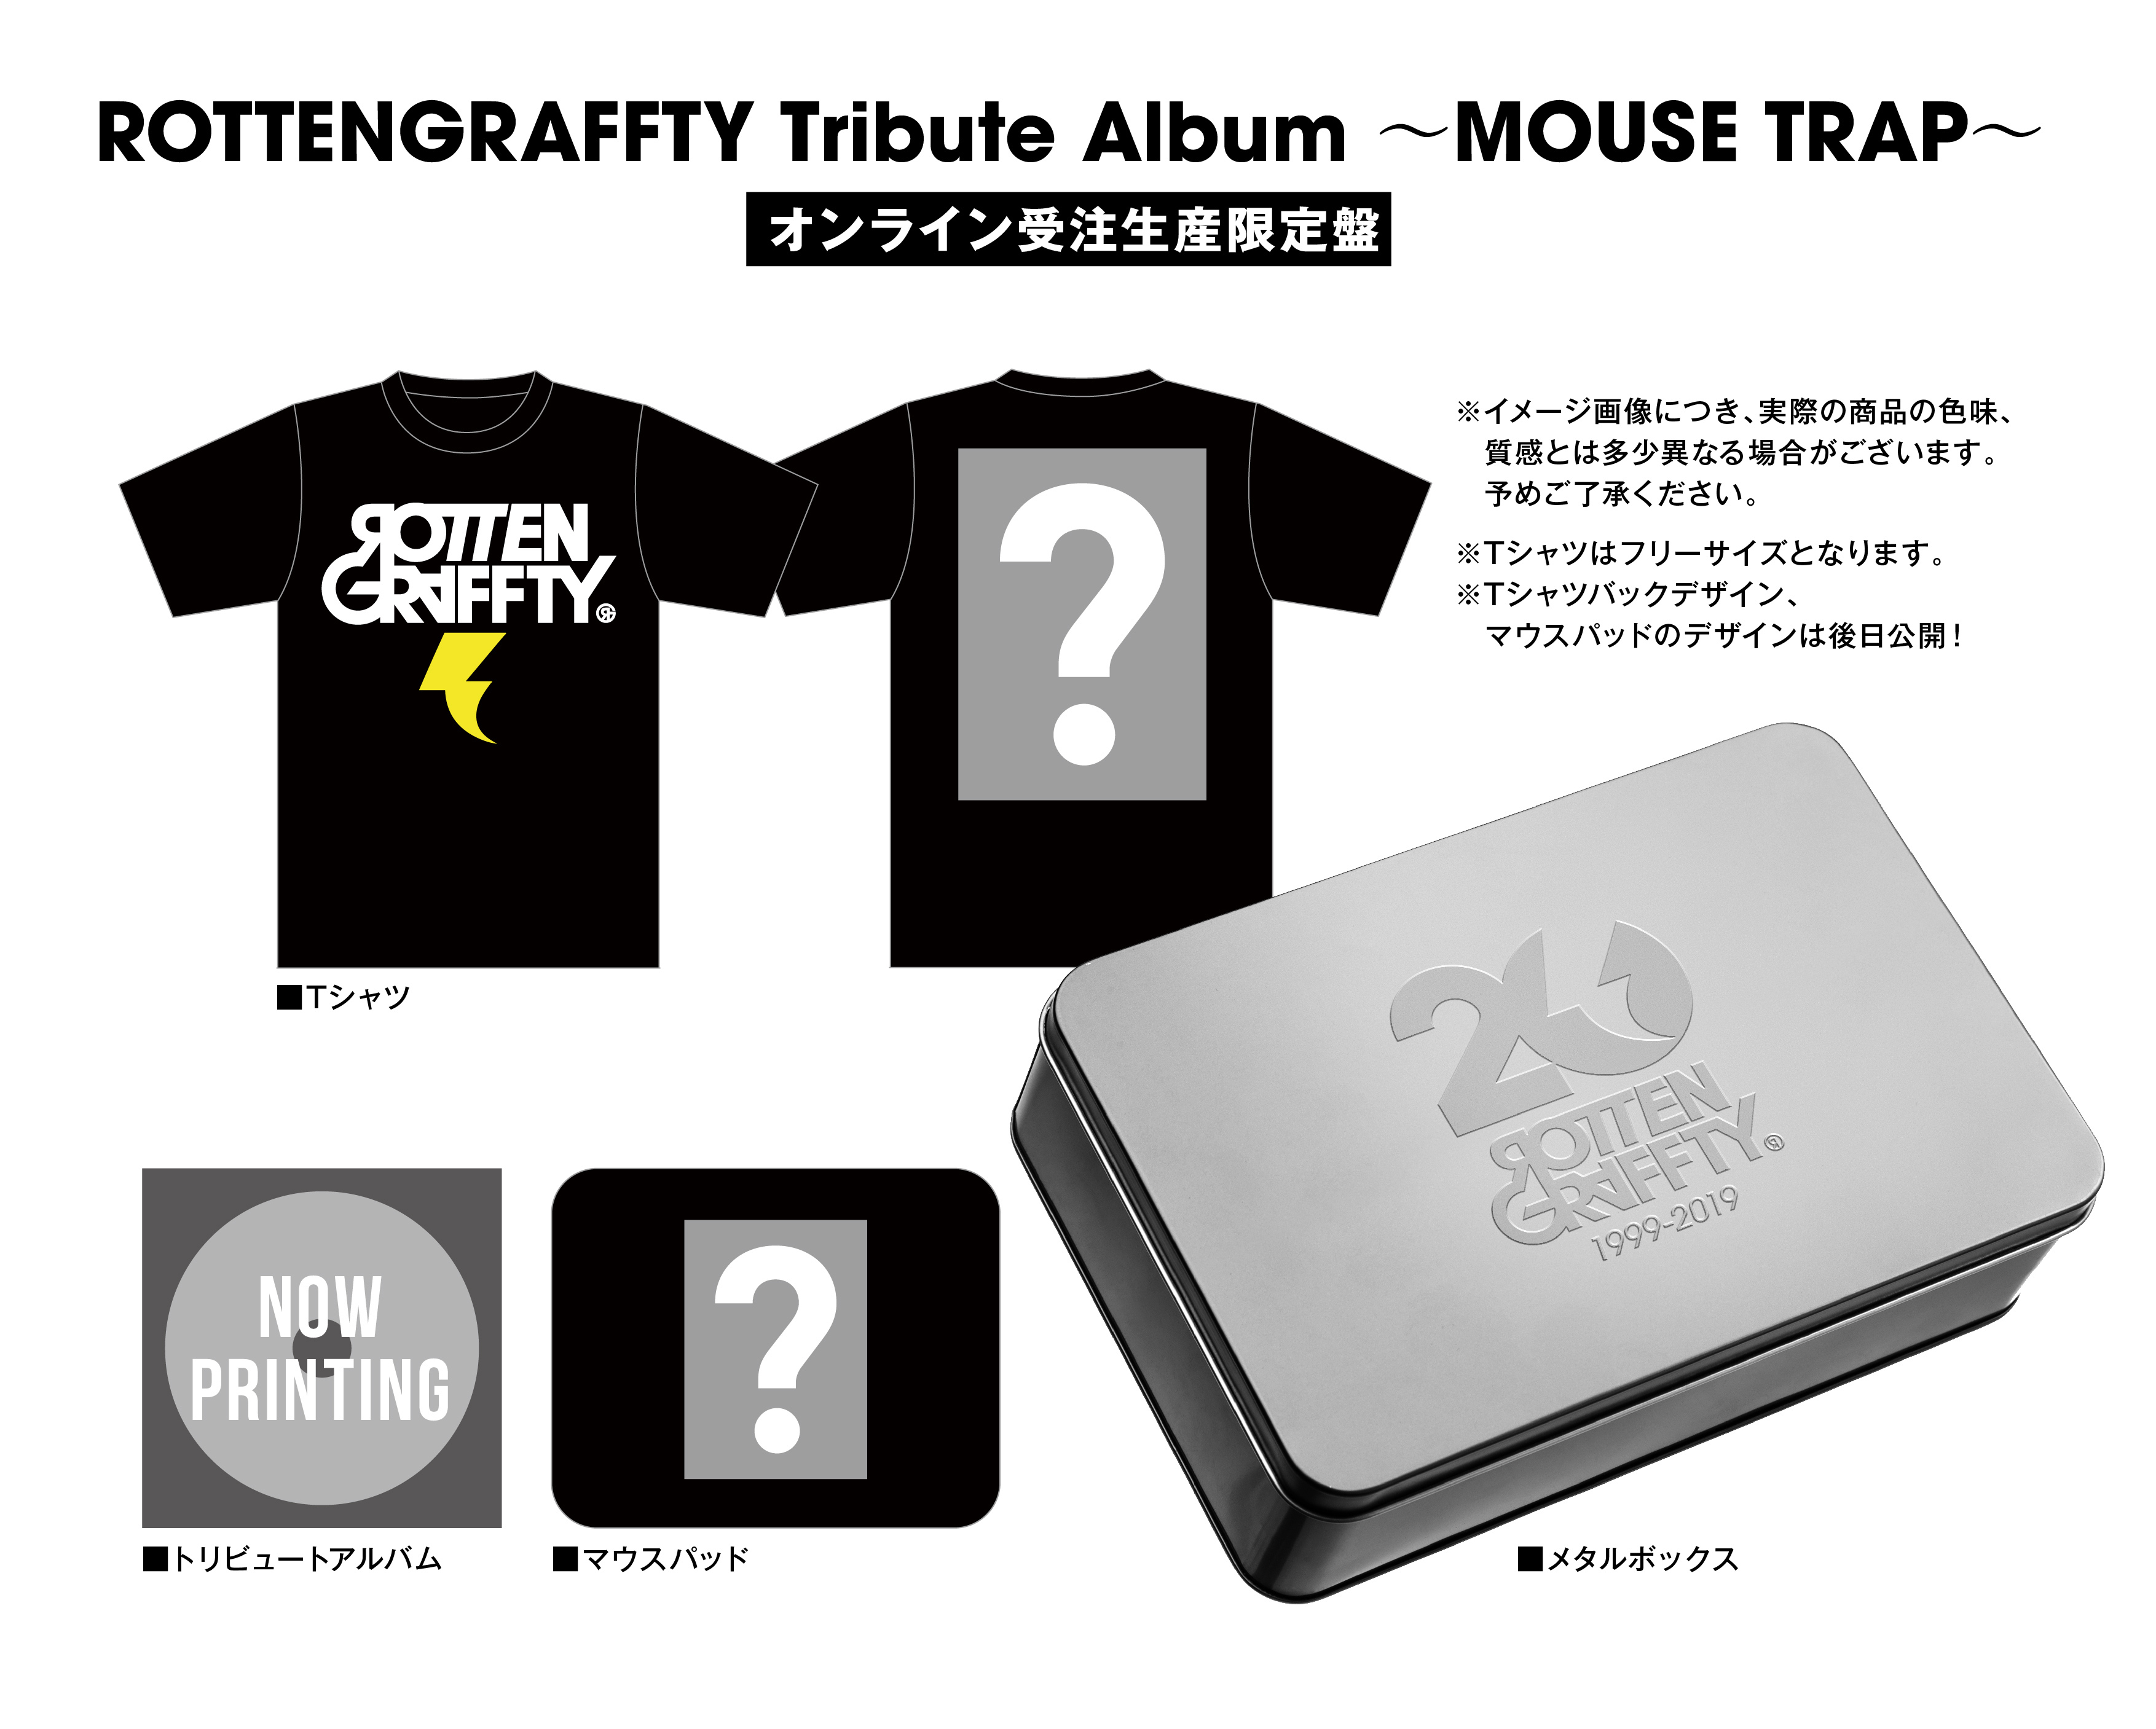 『ROTTENGRAFFTY Tribute Album 〜MOUSE TRAP〜』